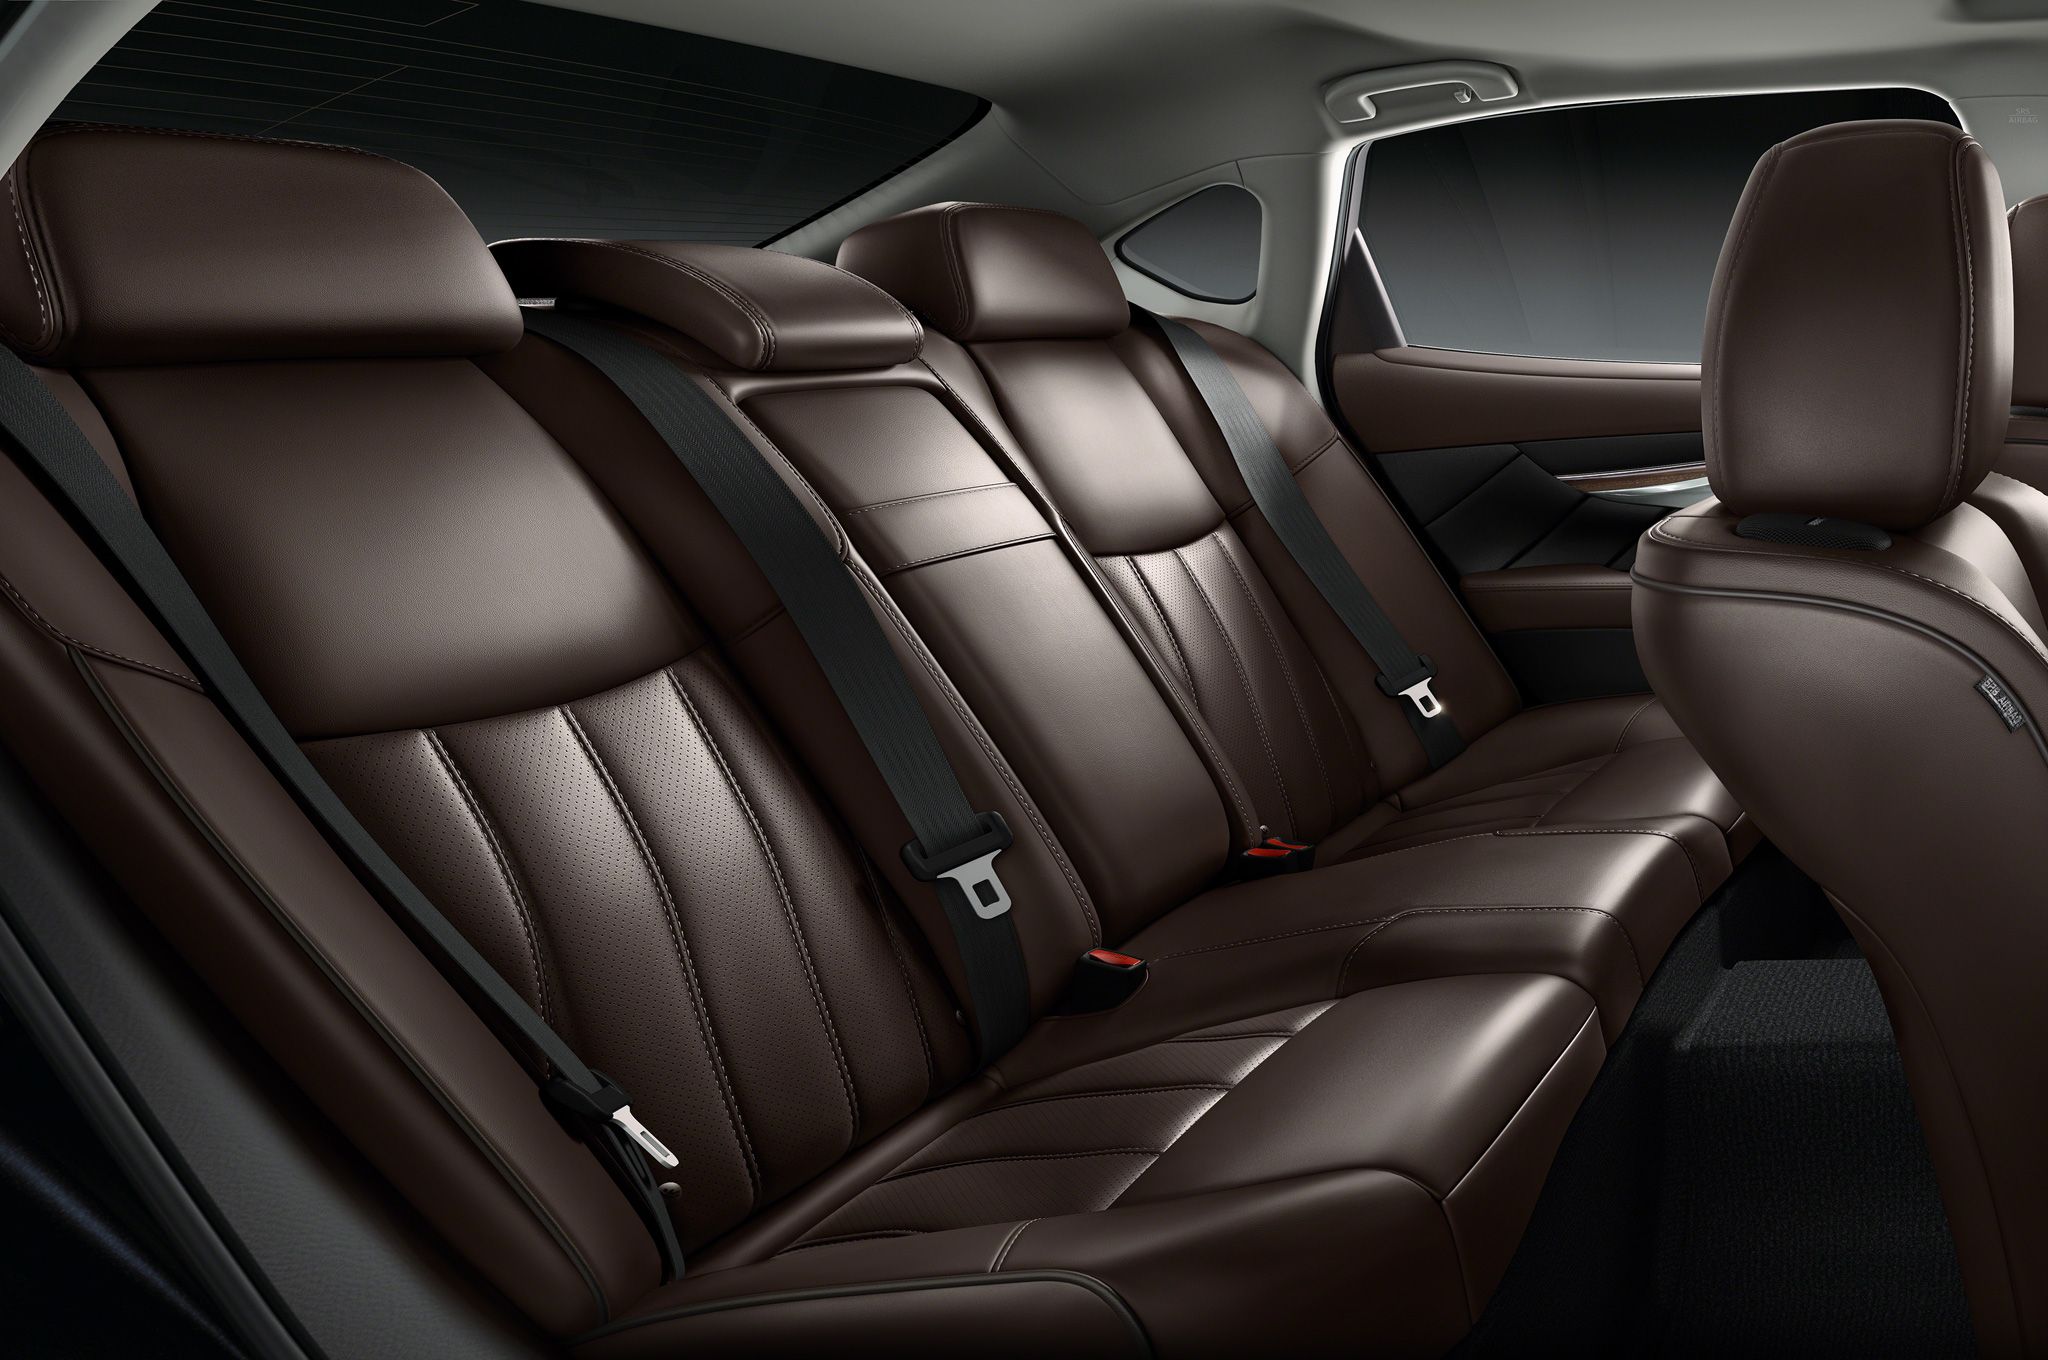 2015 Infiniti Q70l Rear Seat Interior (View 9 of 10)